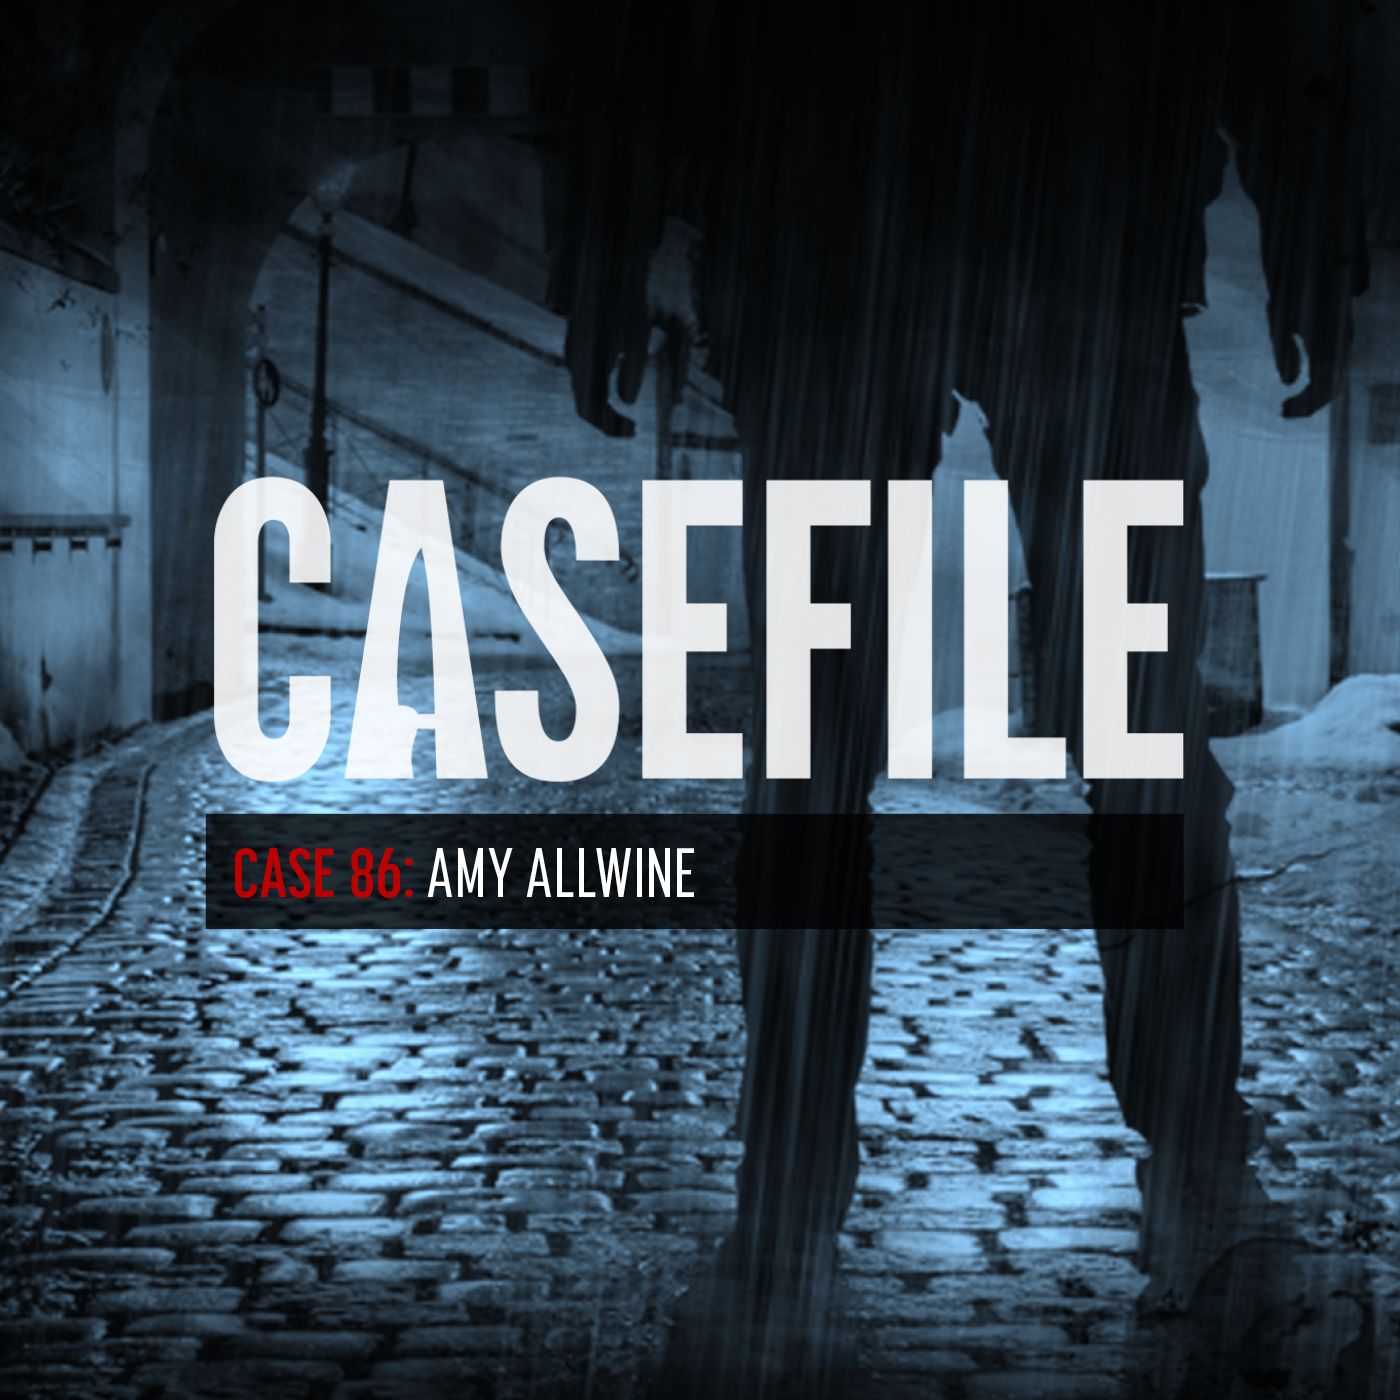 Case 86: Amy Allwine